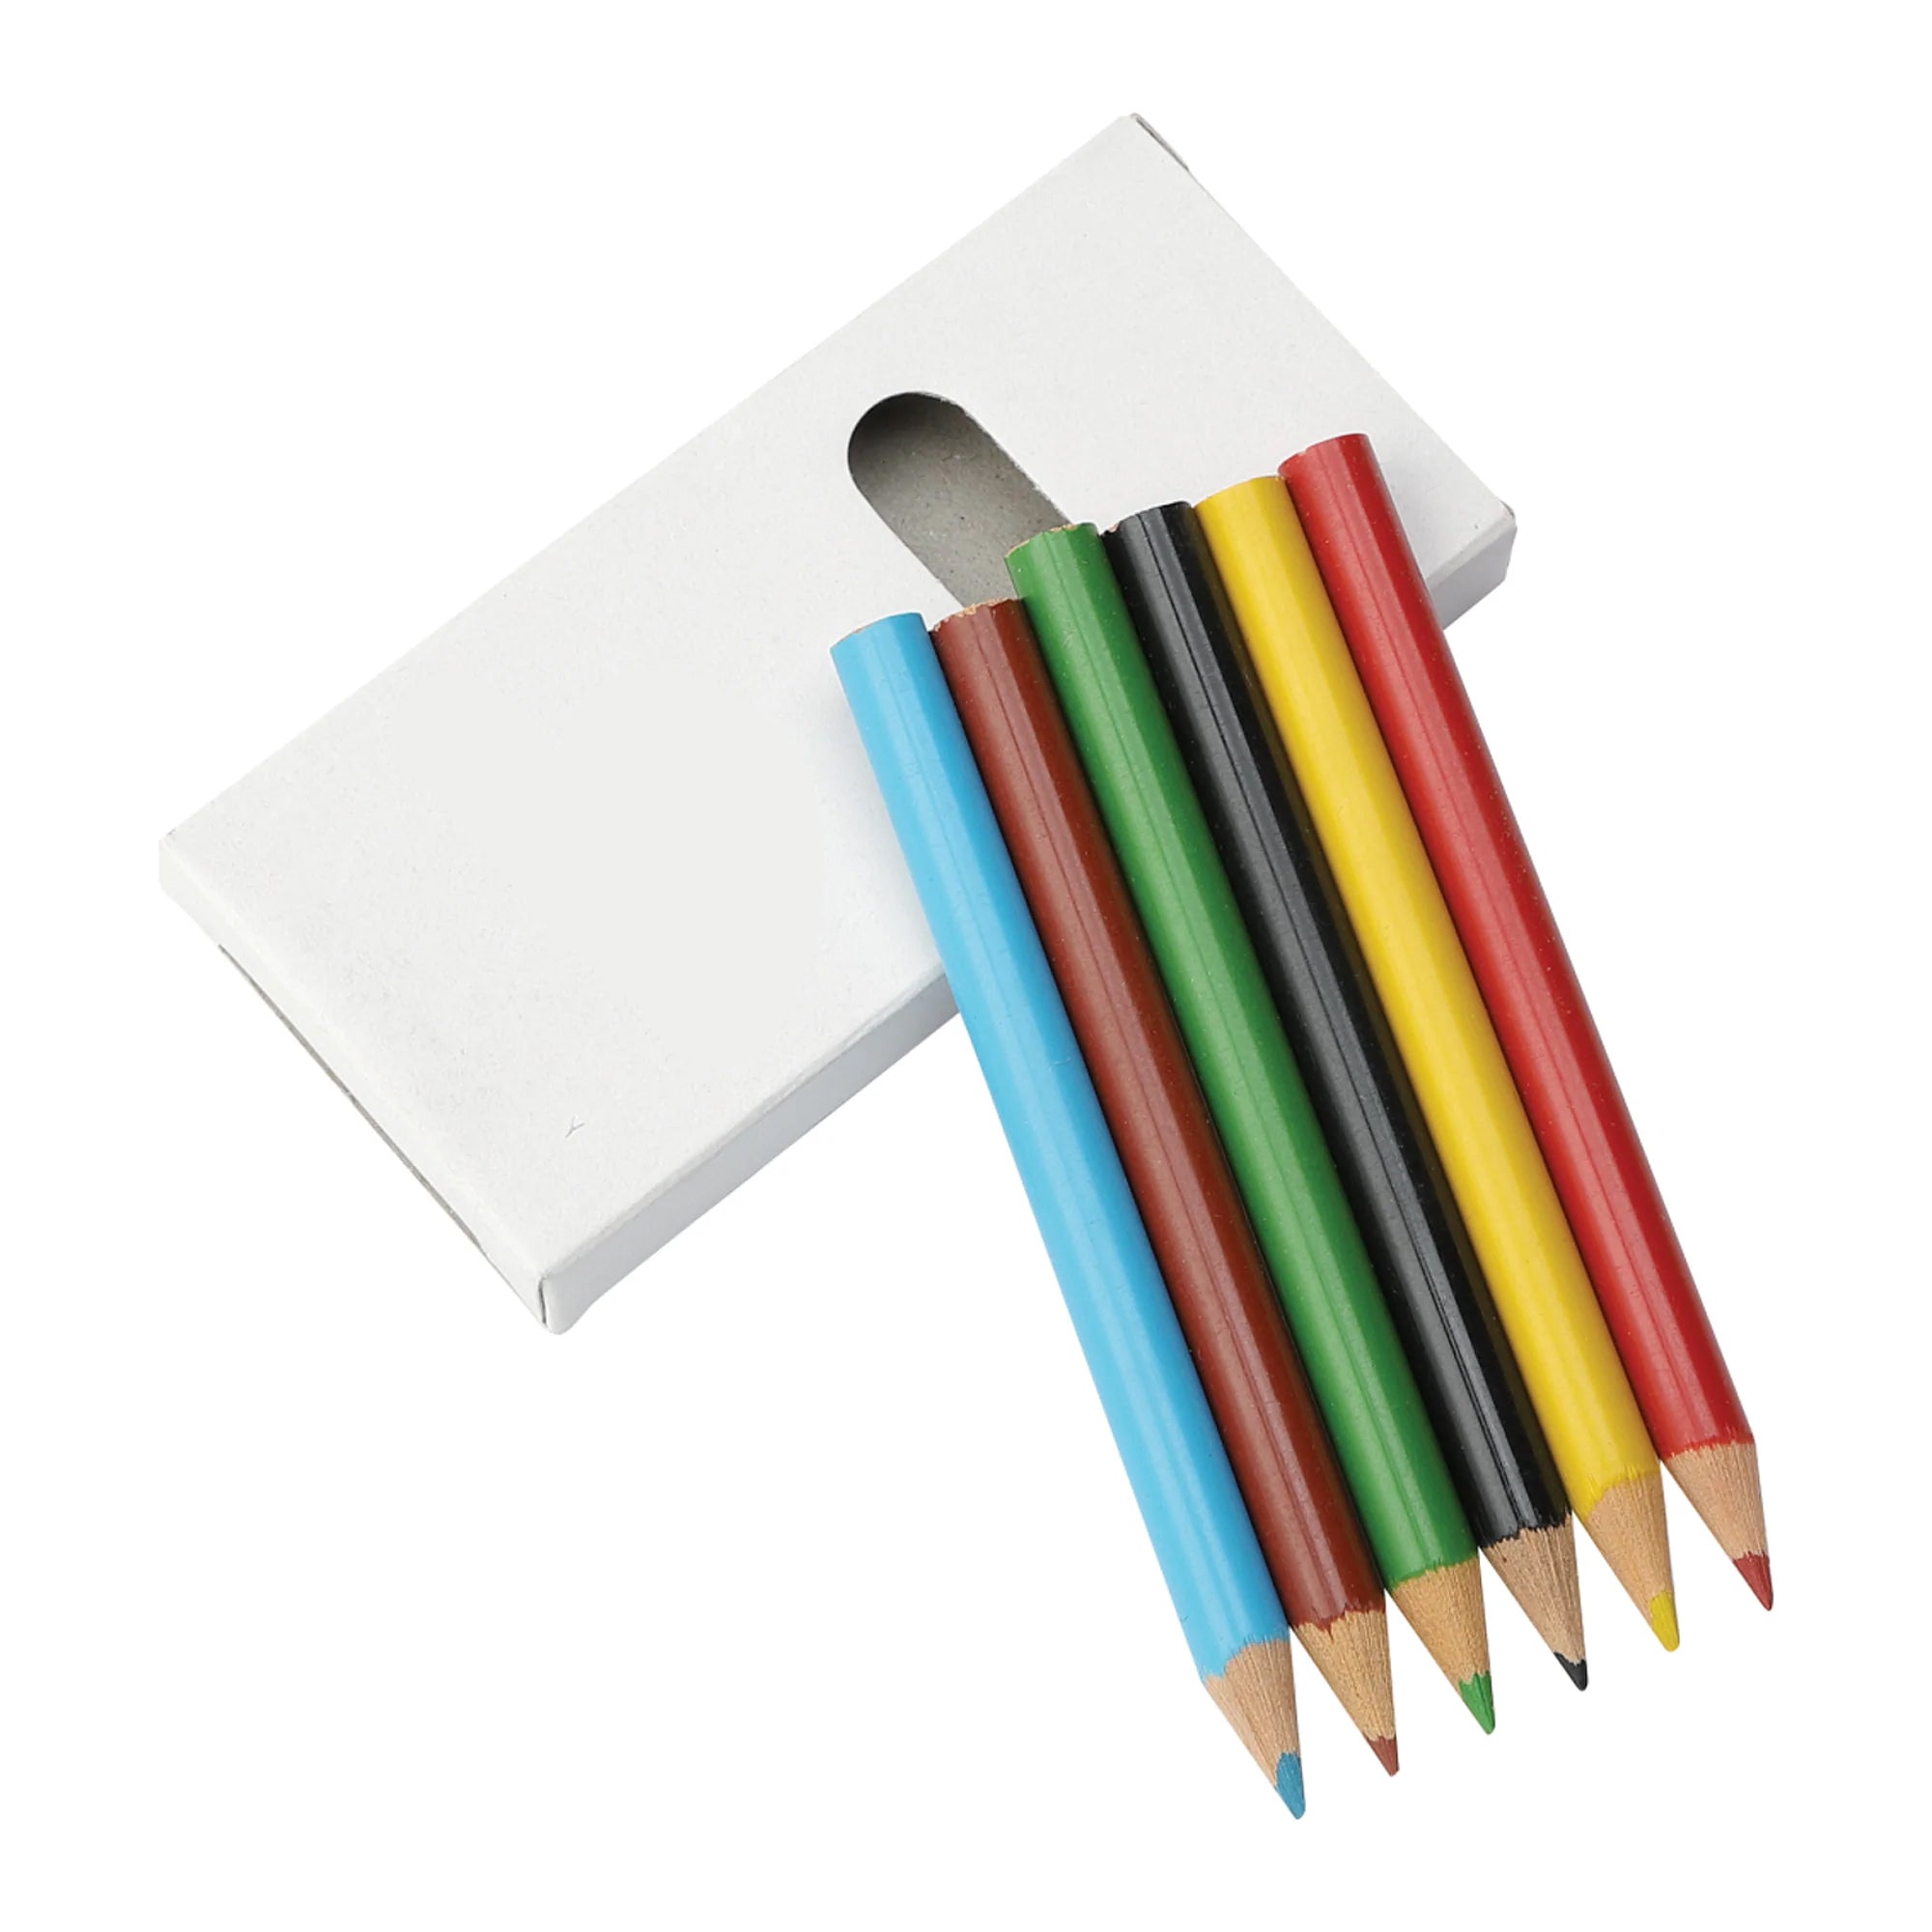 6 Piece Colored Pencils